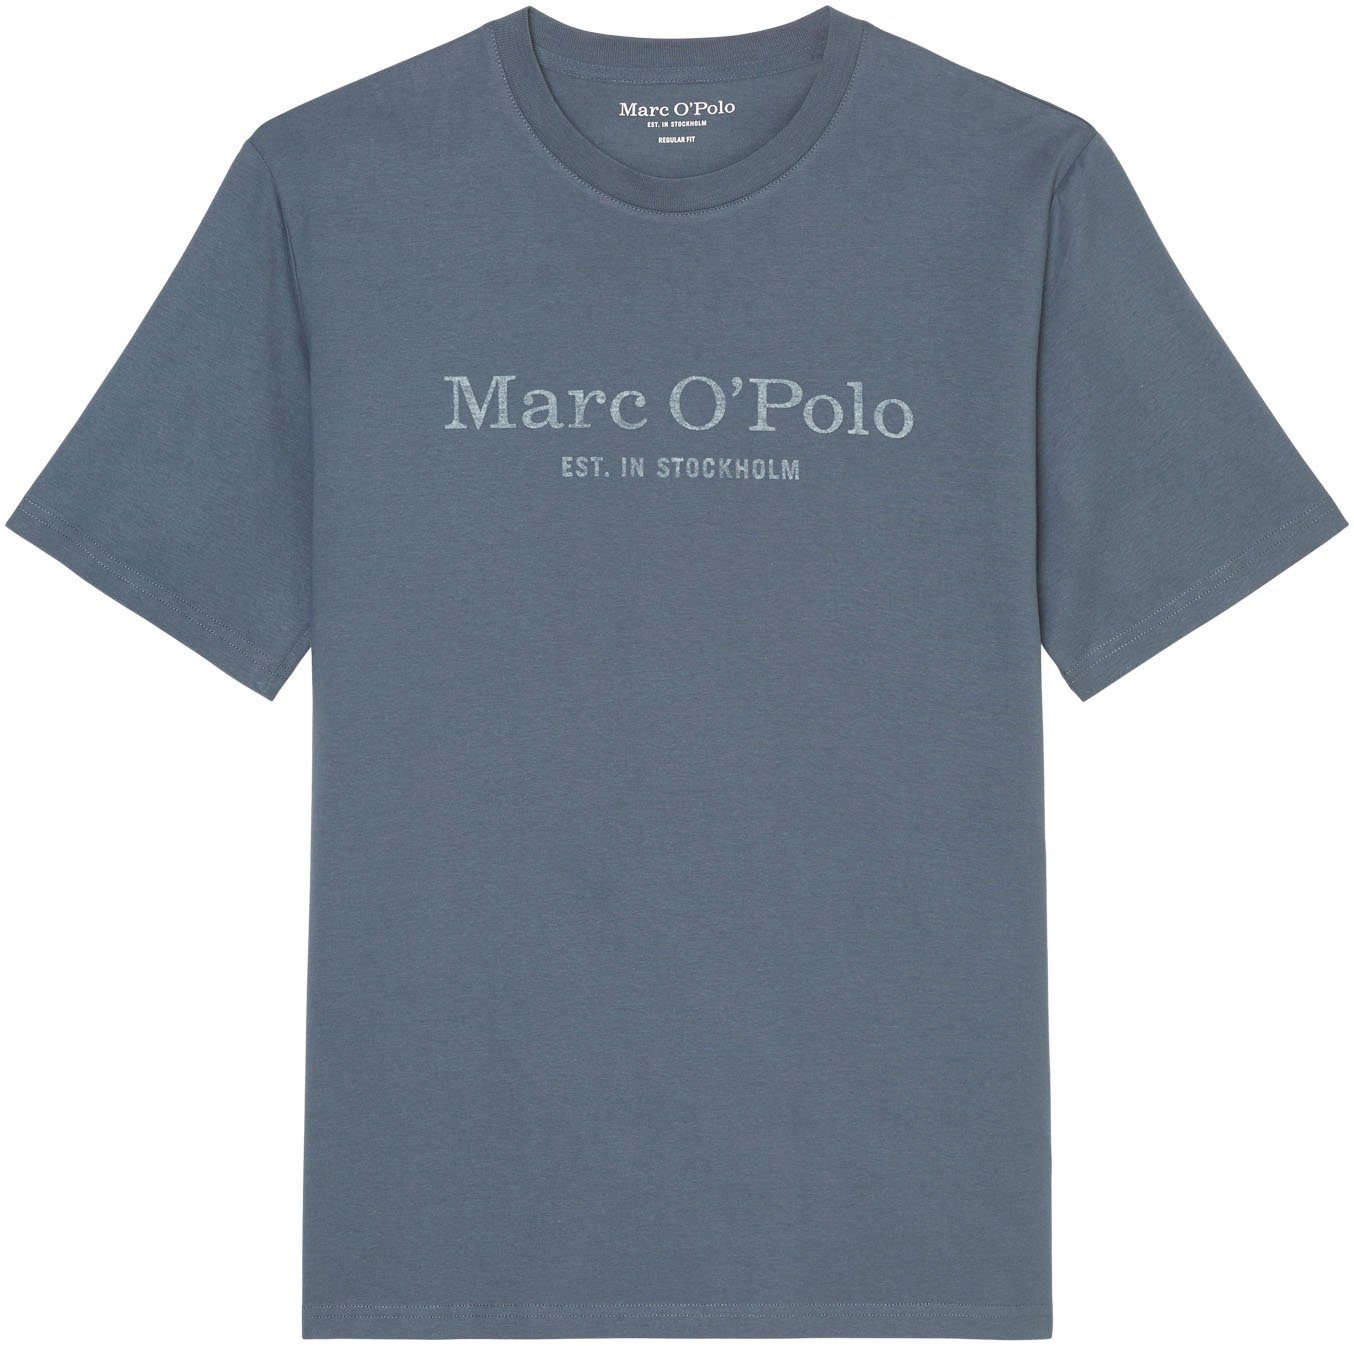 Marc O'Polo dunkelgrau T-Shirt